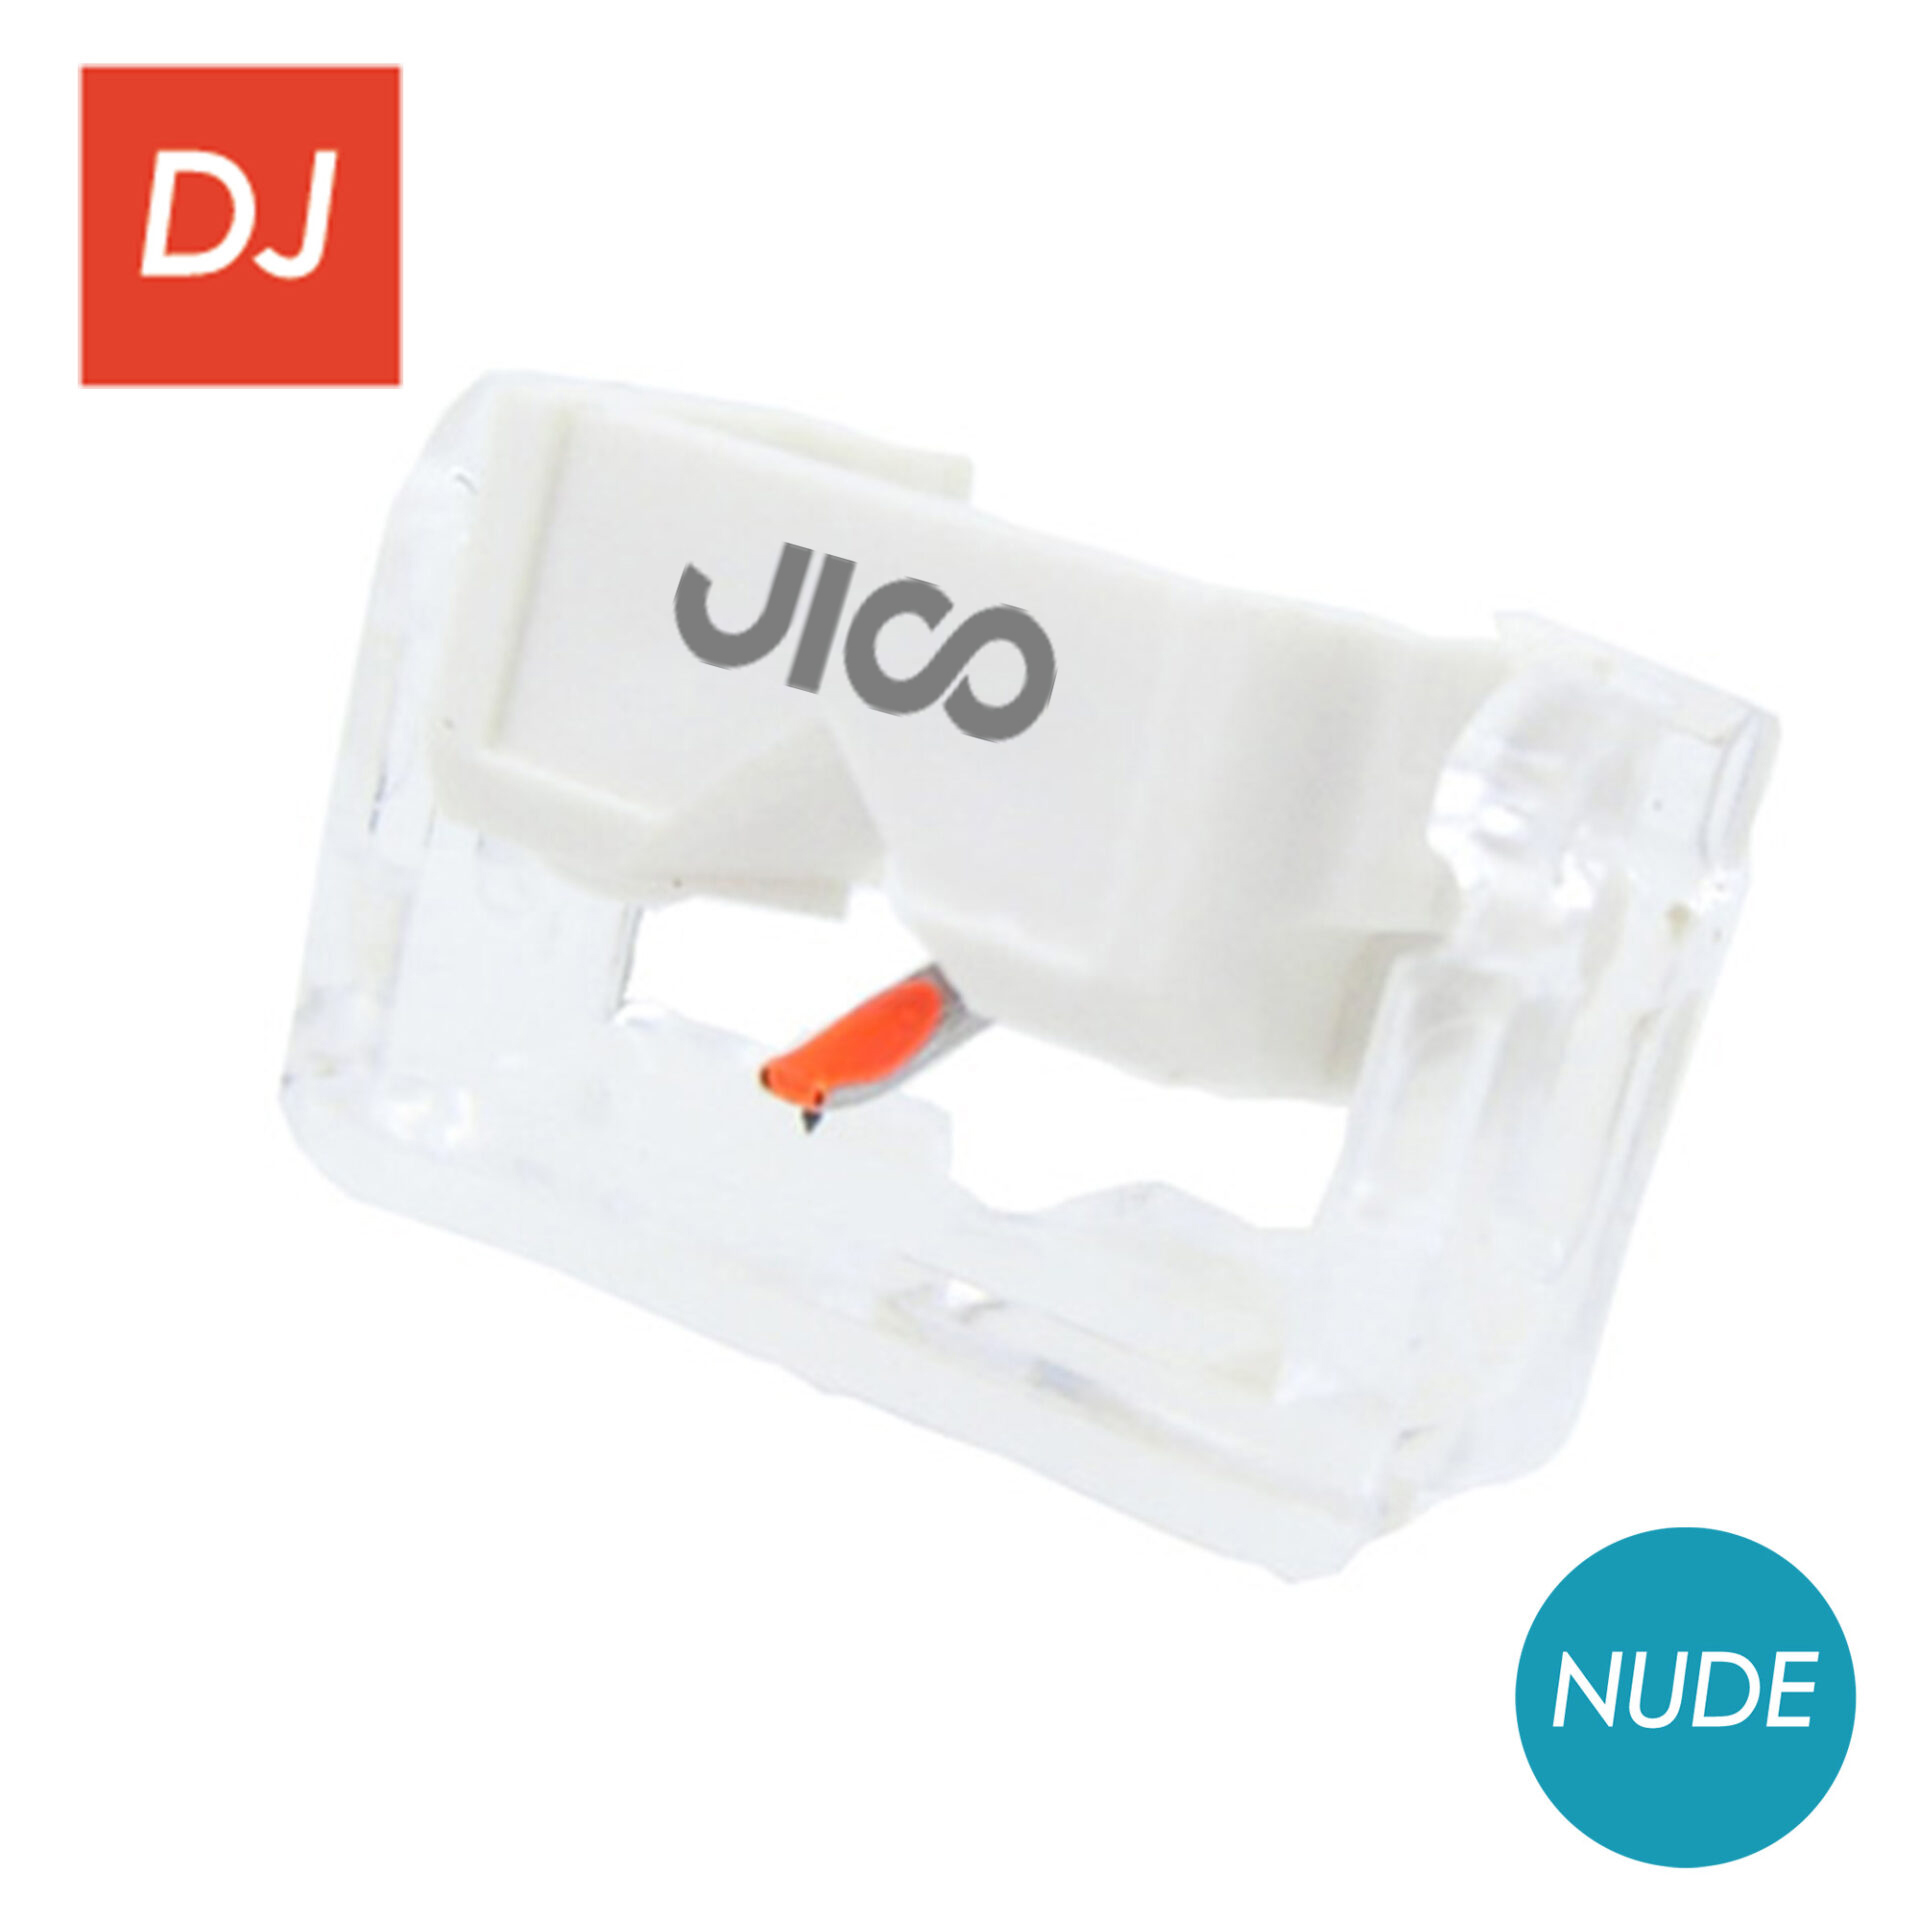 JICO ジコー N44-7 NUDE 無垢丸針 SHURE シュア レコード針